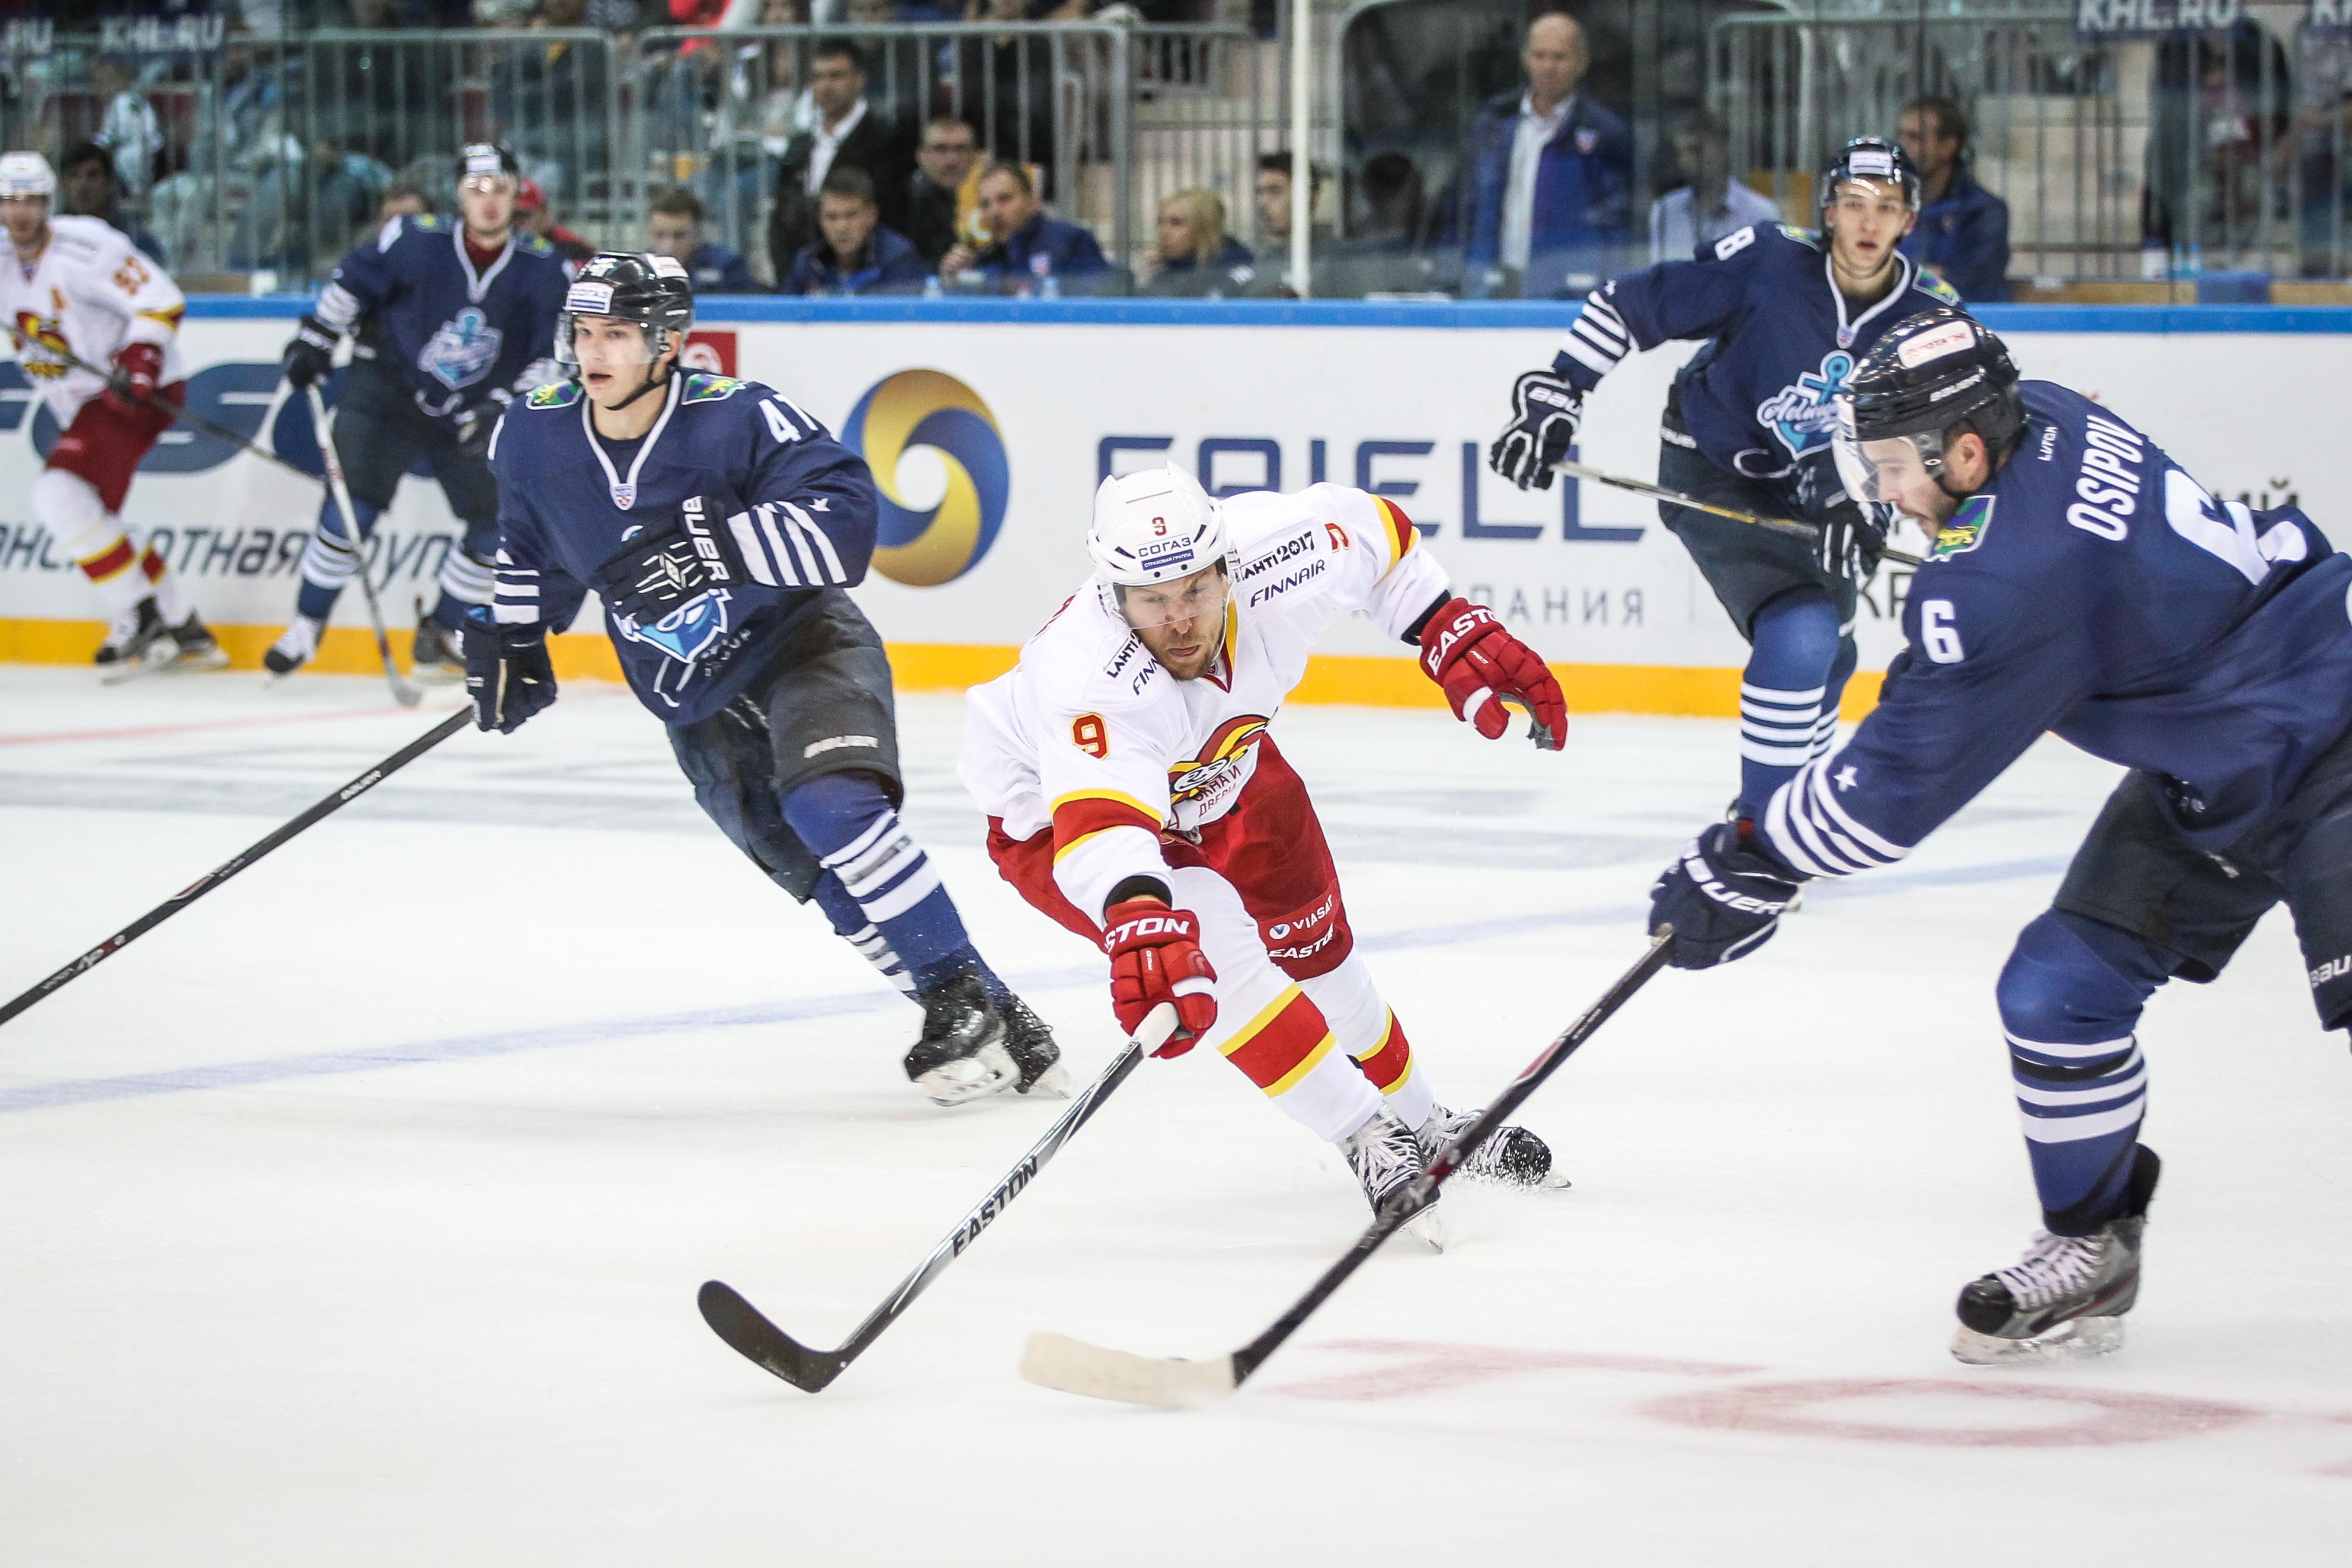 KHL-Rekord: Jokerit Helsinki mit Tor in 143. Minute